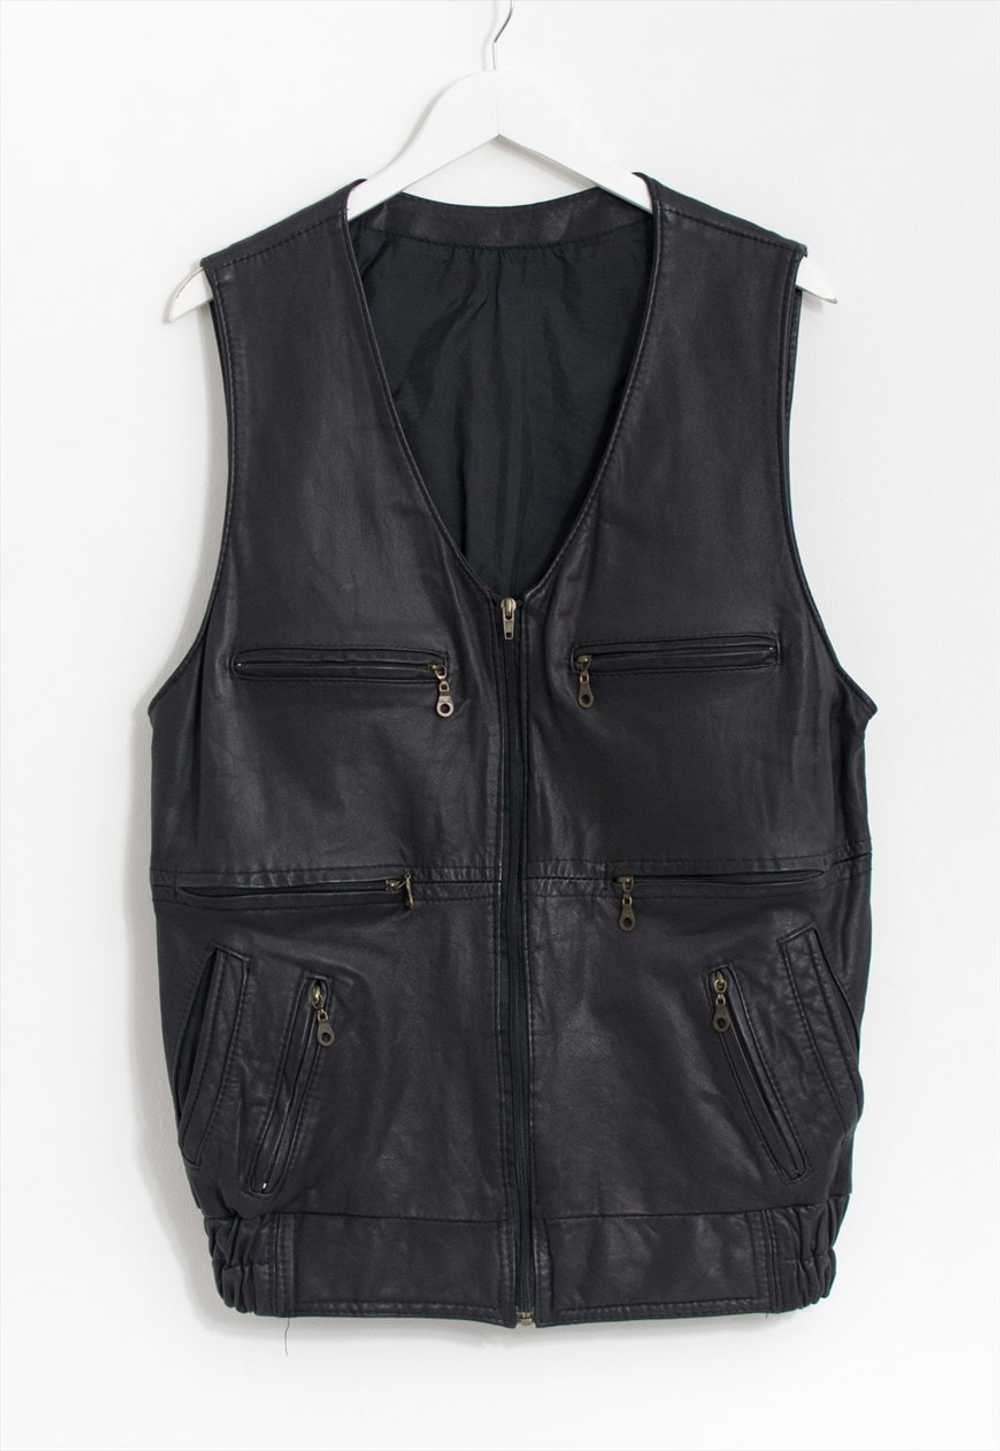 Vintage black leather vest sleeveless jacket men - image 5